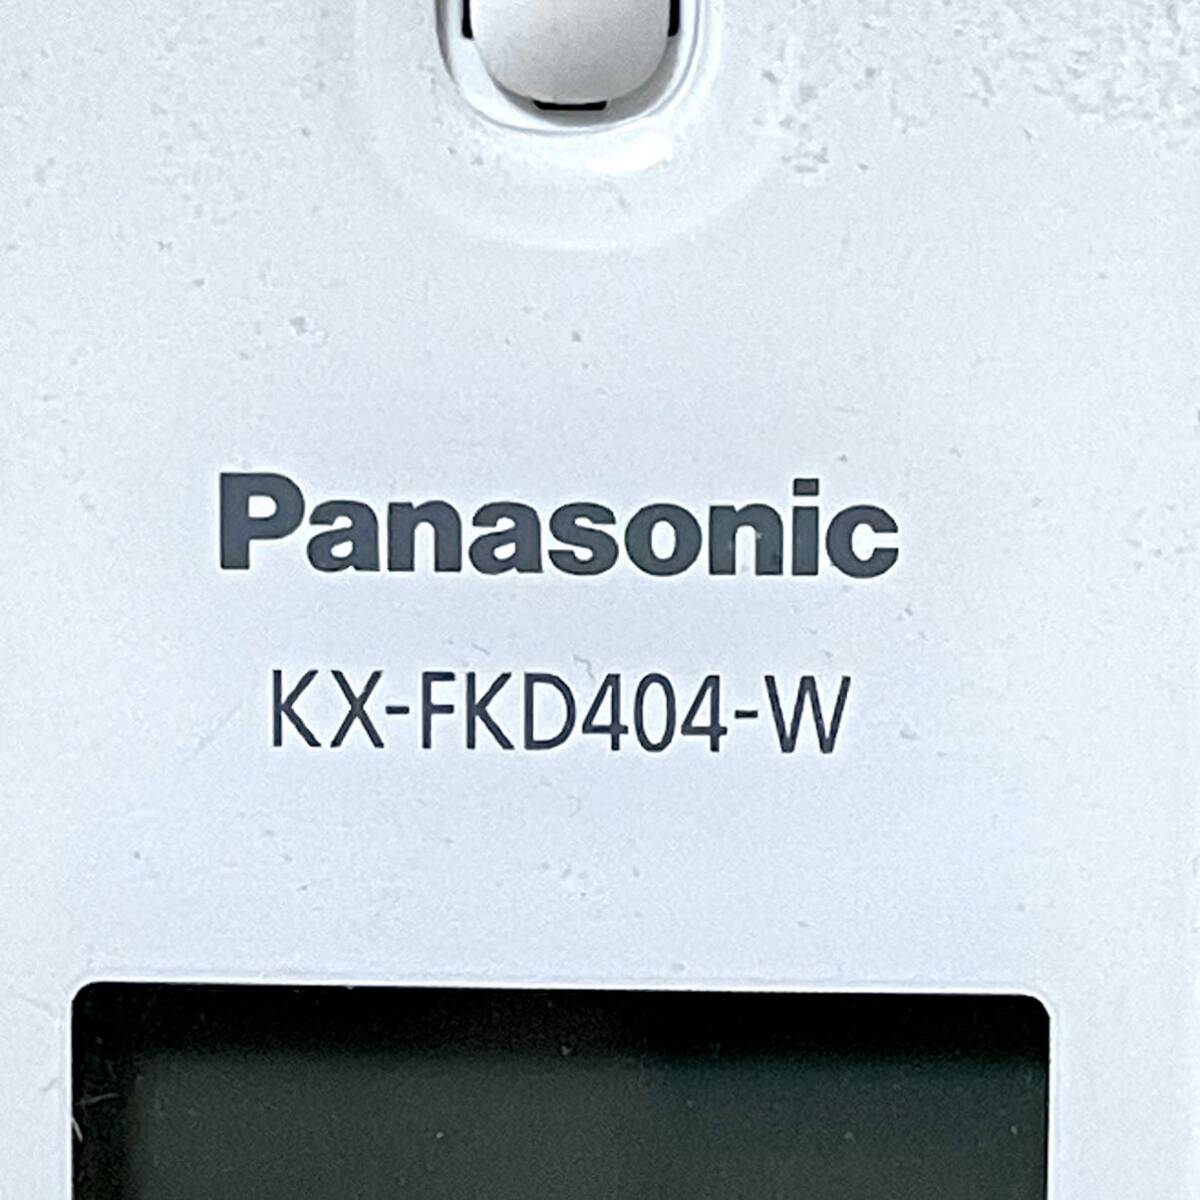  simple operation verification settled Panasonic/ Panasonic home use telephone machine / cordless telephone machine parent machine :KX-PD205DL/ cordless handset KX-FKD404